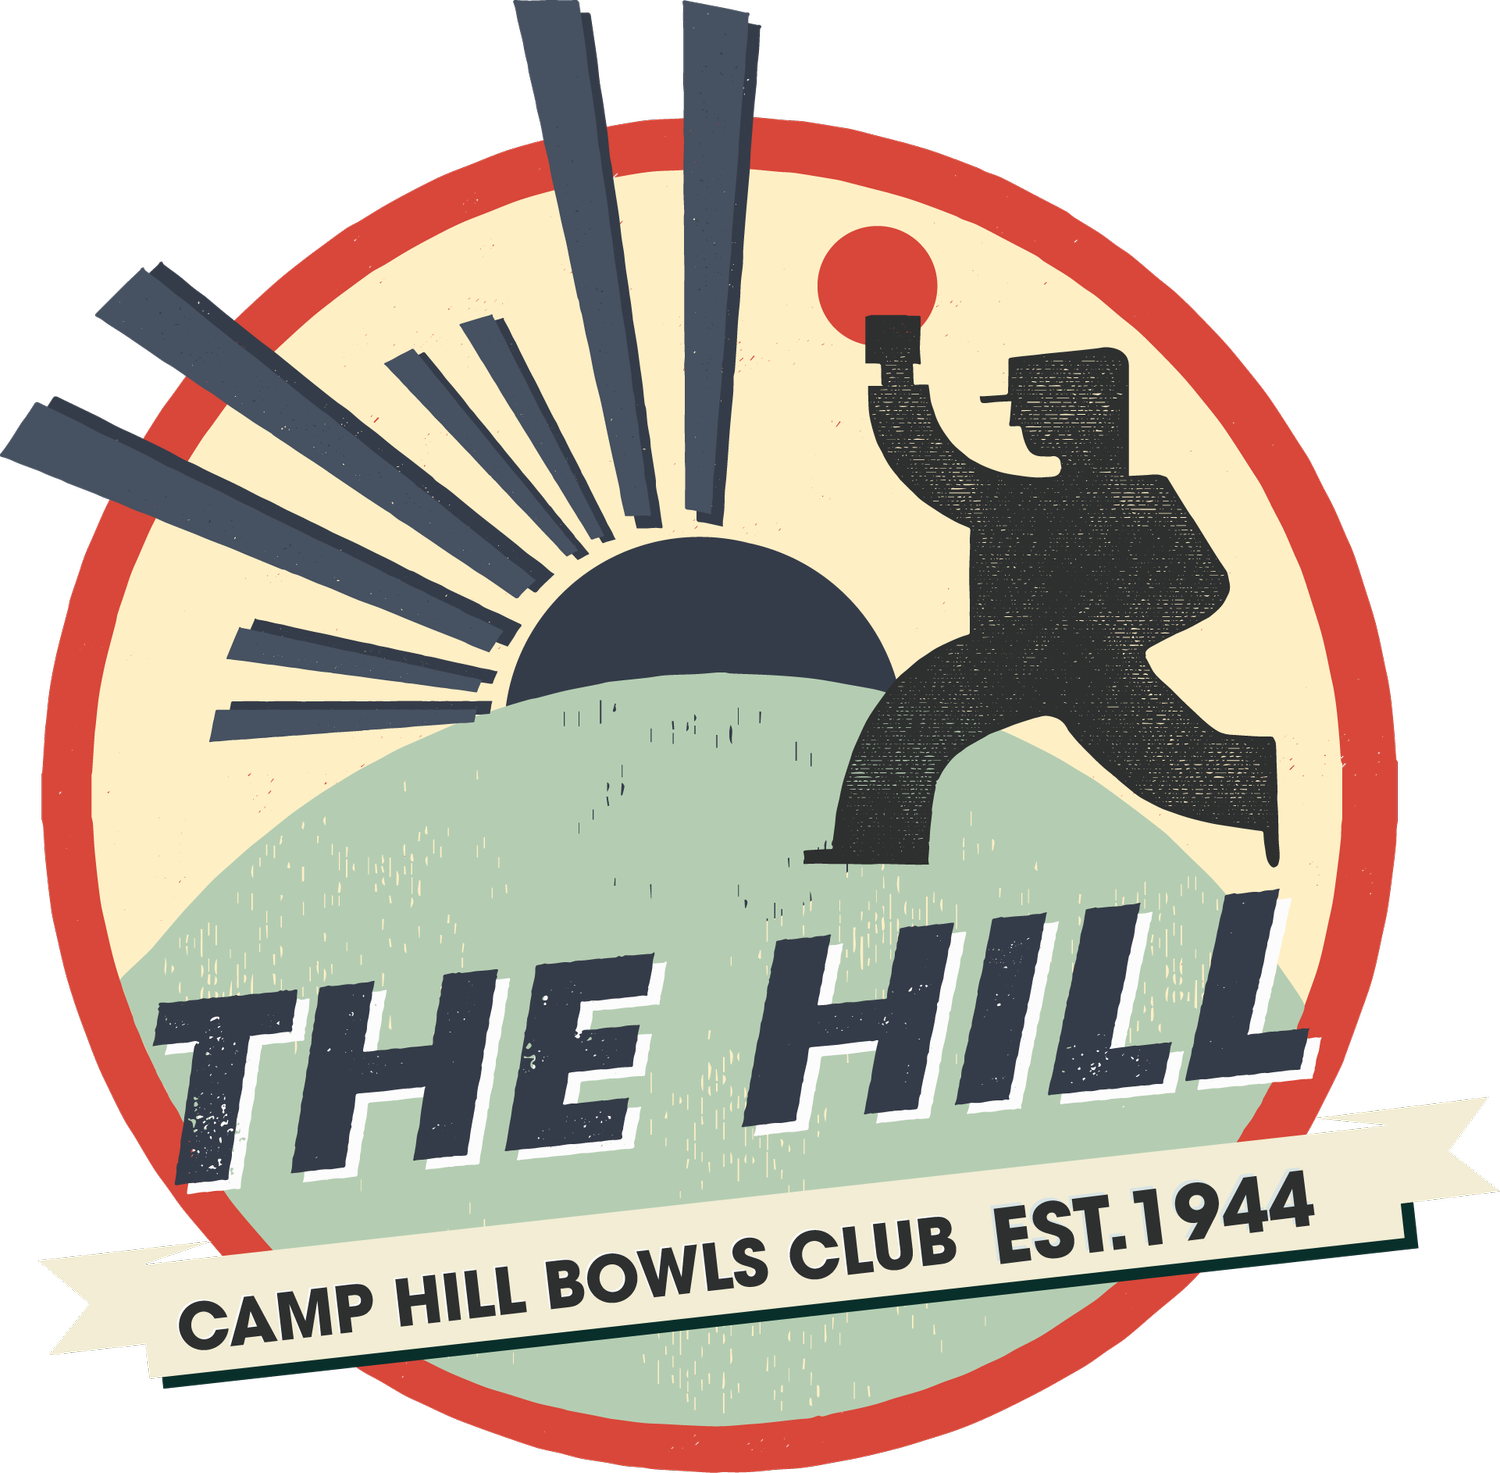 Camp Hill Bowls Club